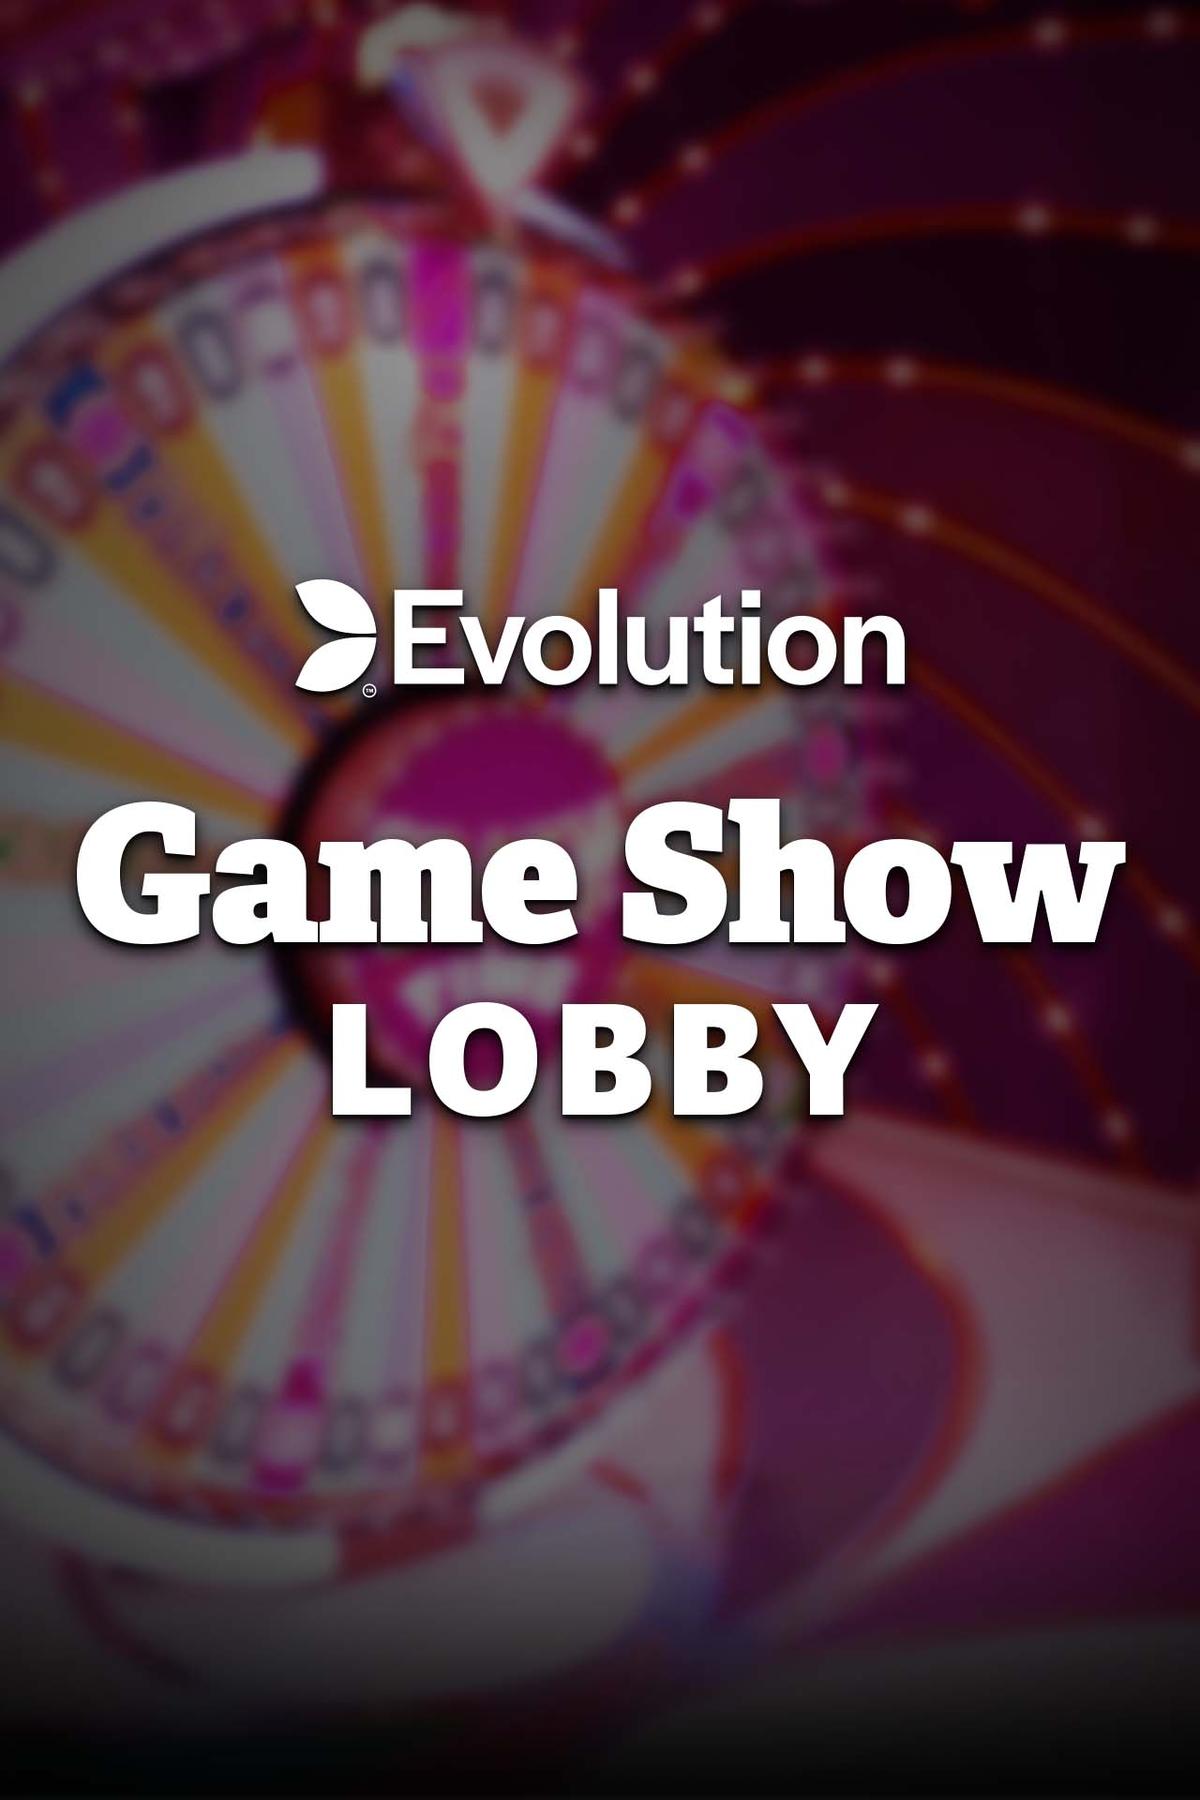 Gameshows Lobby Evolution